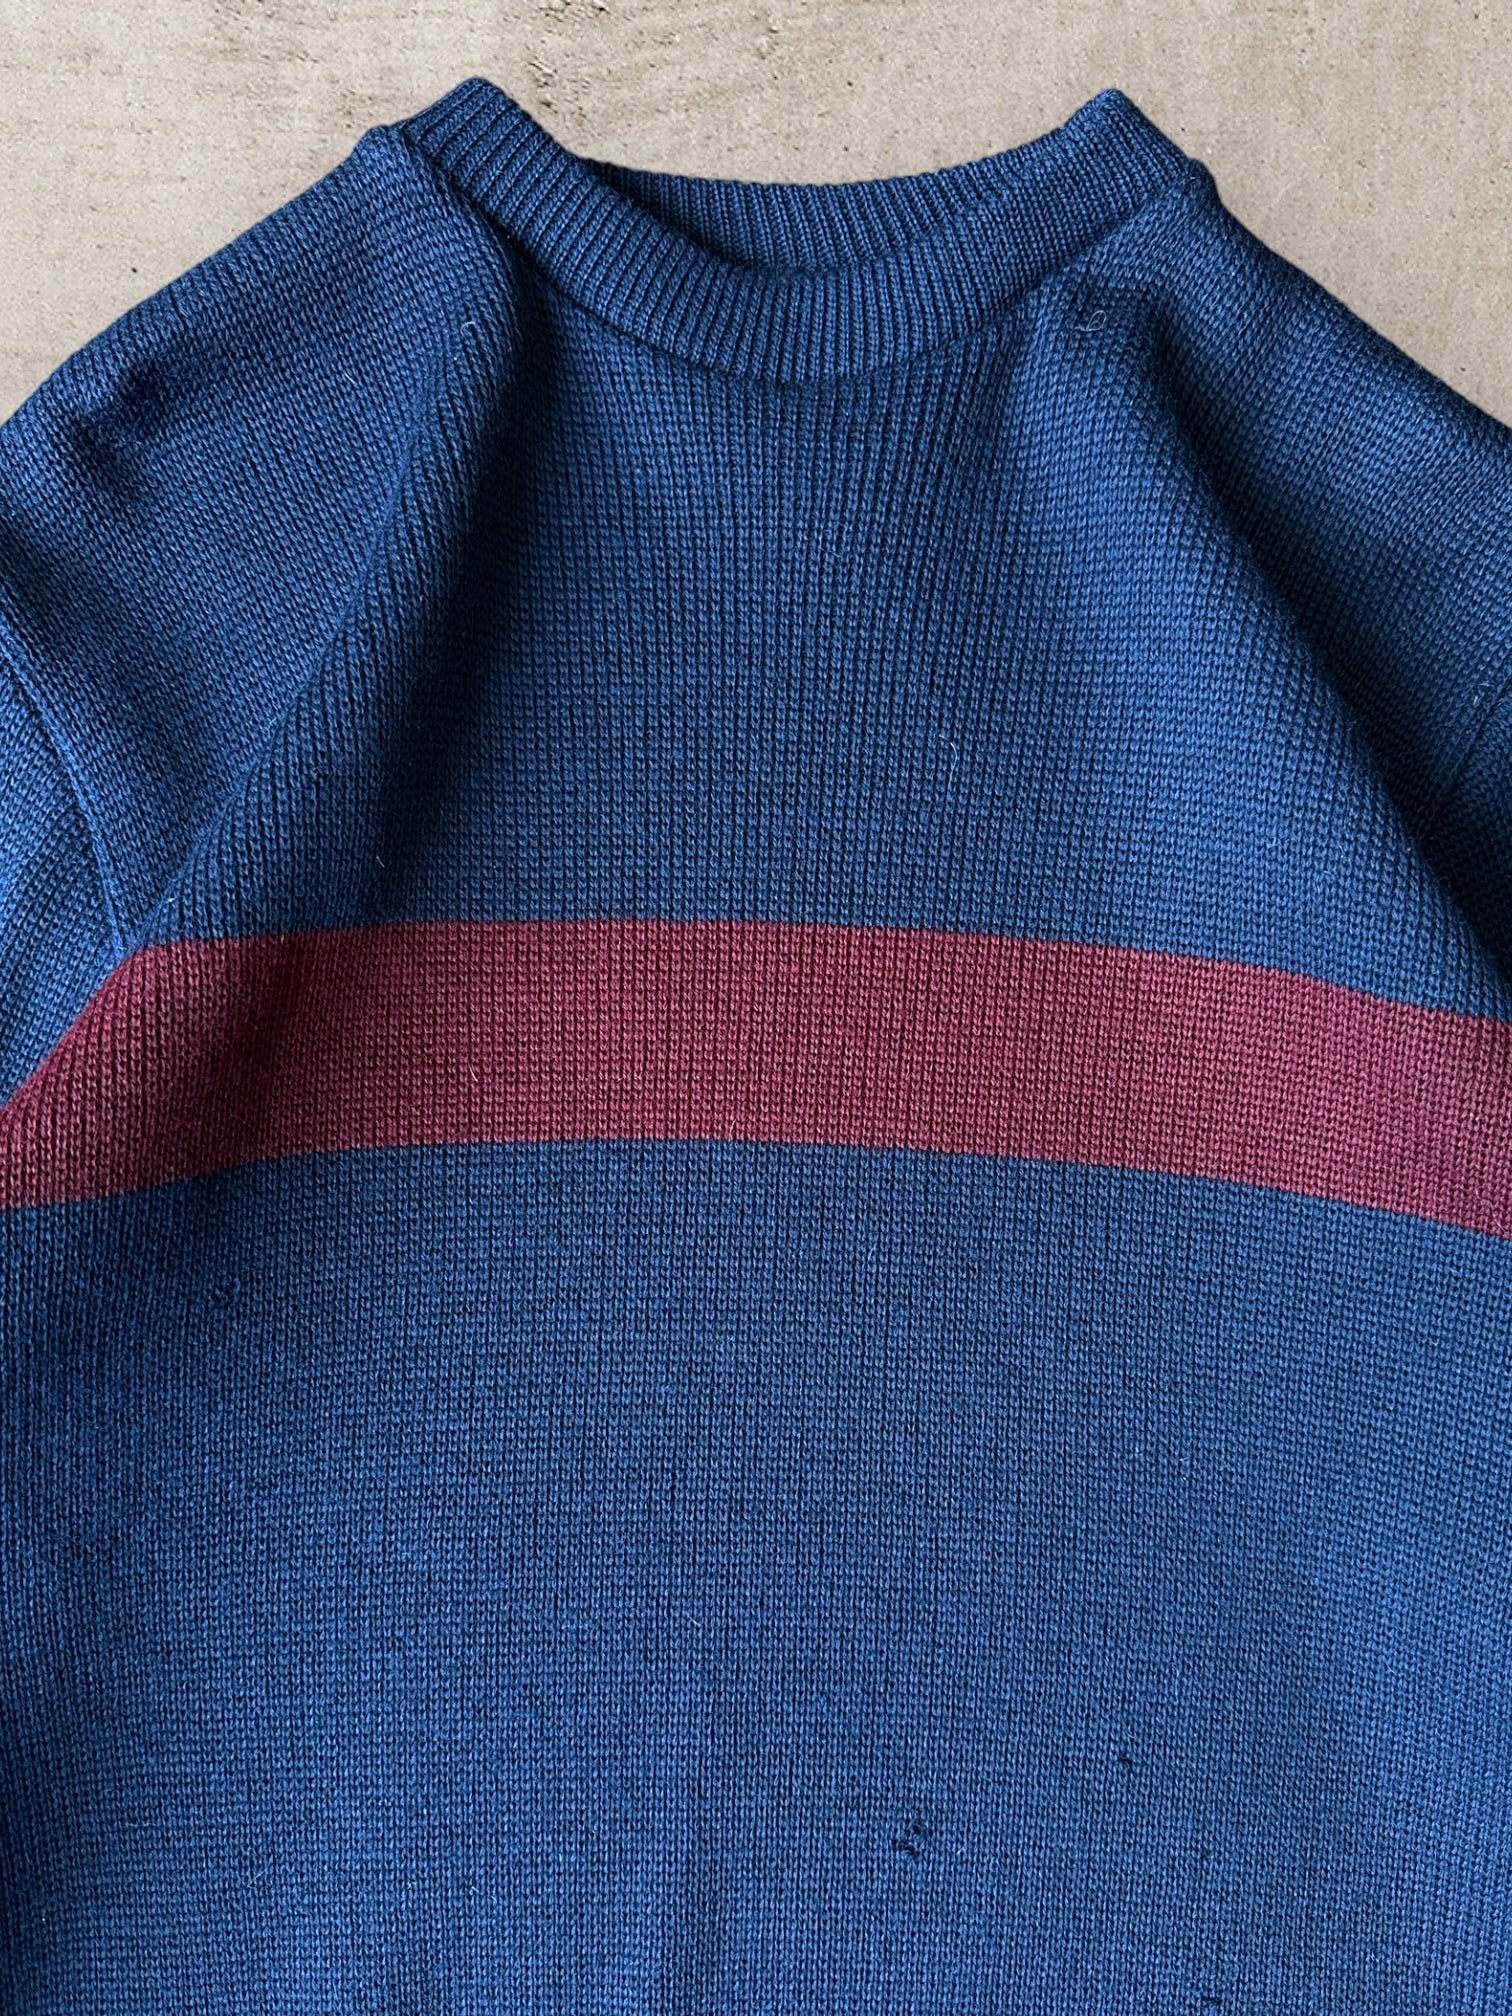 70s/80s Avalanche Navy Blue & Maroon Striped Knit Sweater - Medium